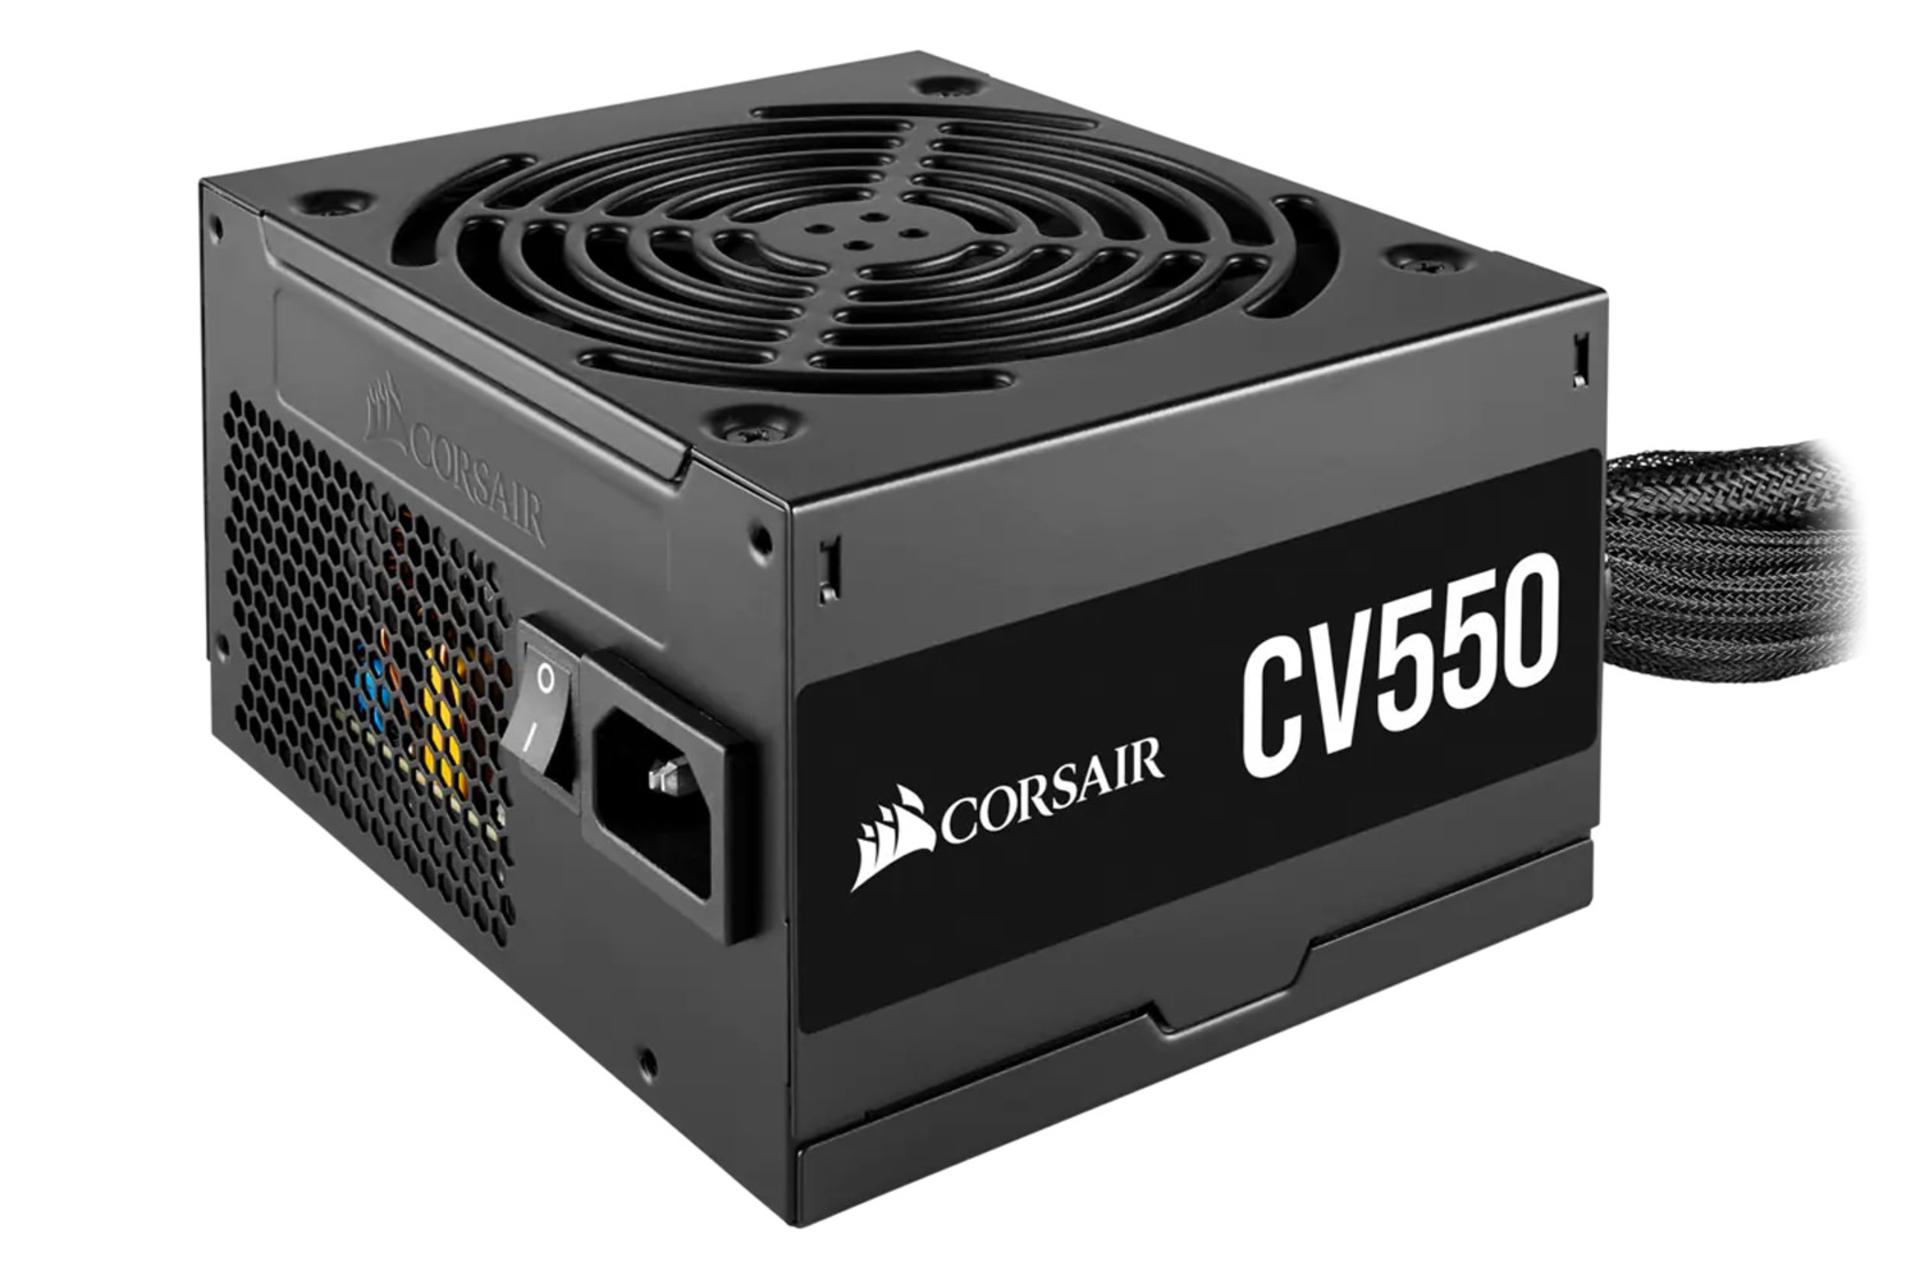 پاور کامپیوتر کورسیر CV550 CP-9020210 با توان 550 وات